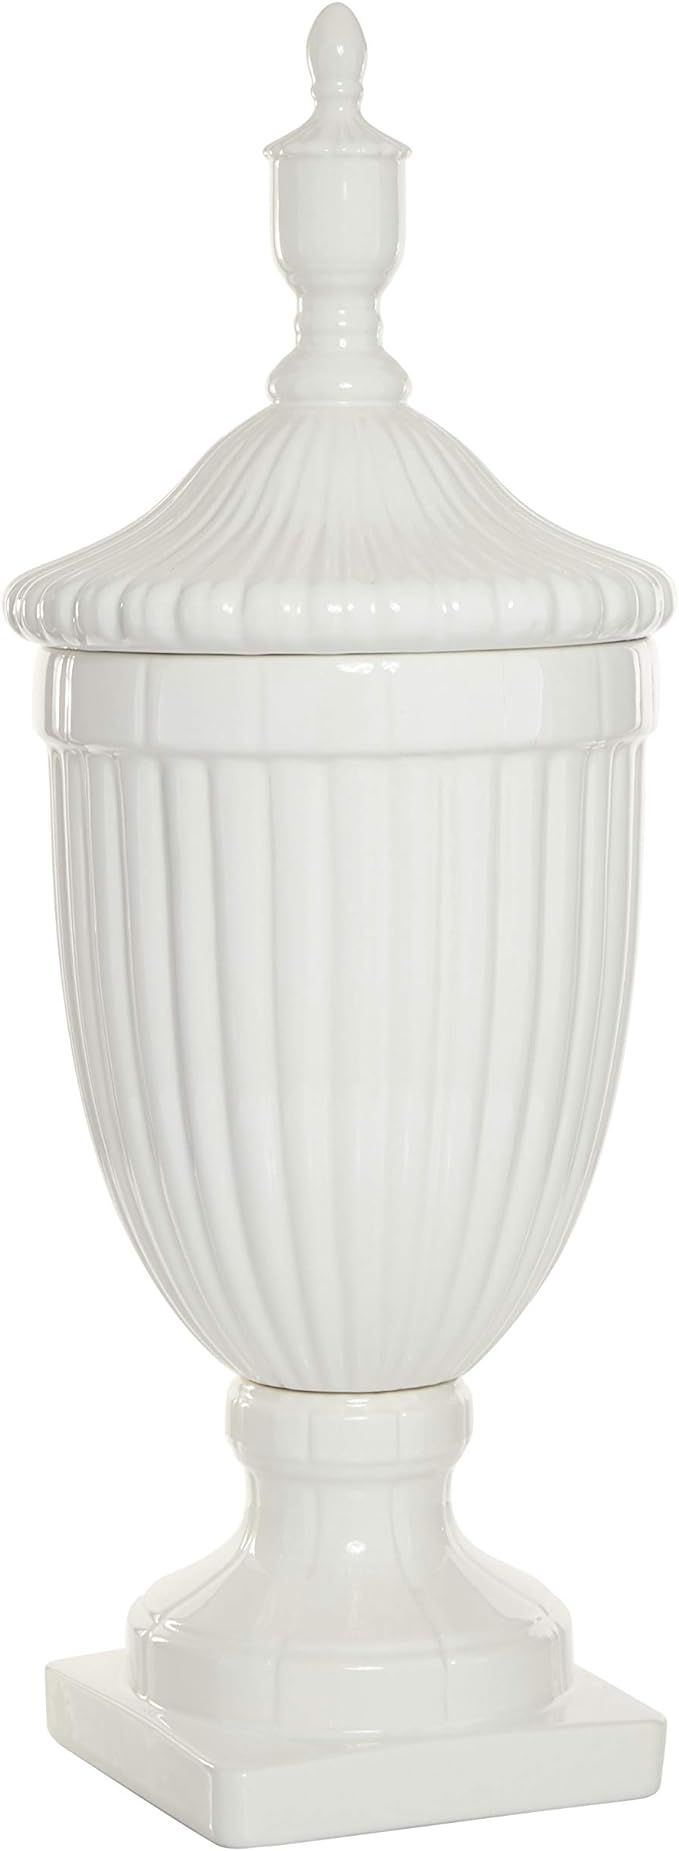 Deco 79 Ceramic Decorative Jars with Lid, 10" x 10" x 26", White | Amazon (US)